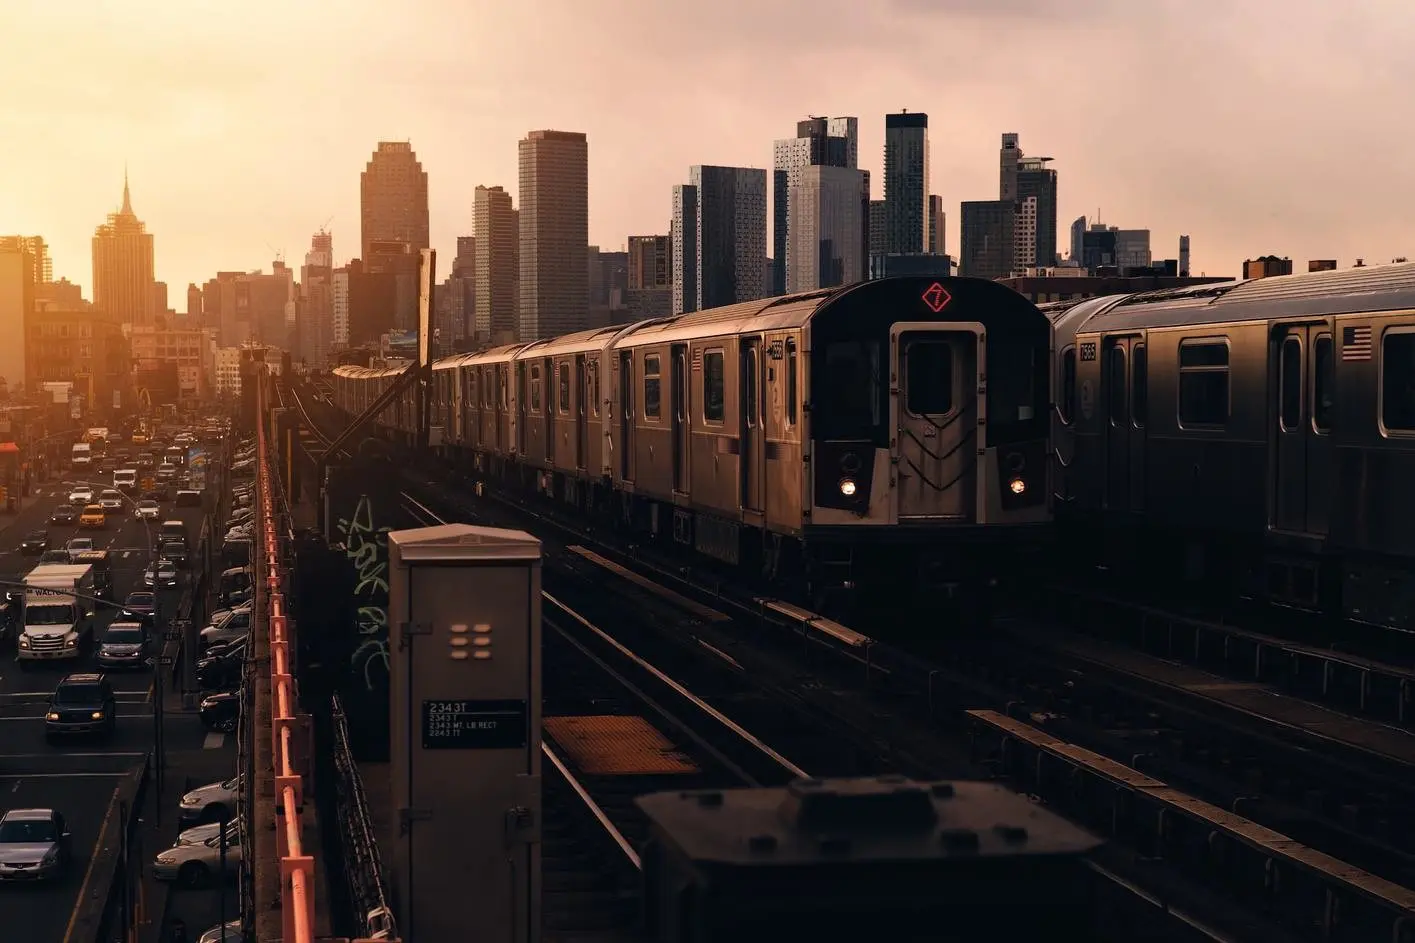 tren en new york - Cuánto cuesta la tarjeta del tren en New York